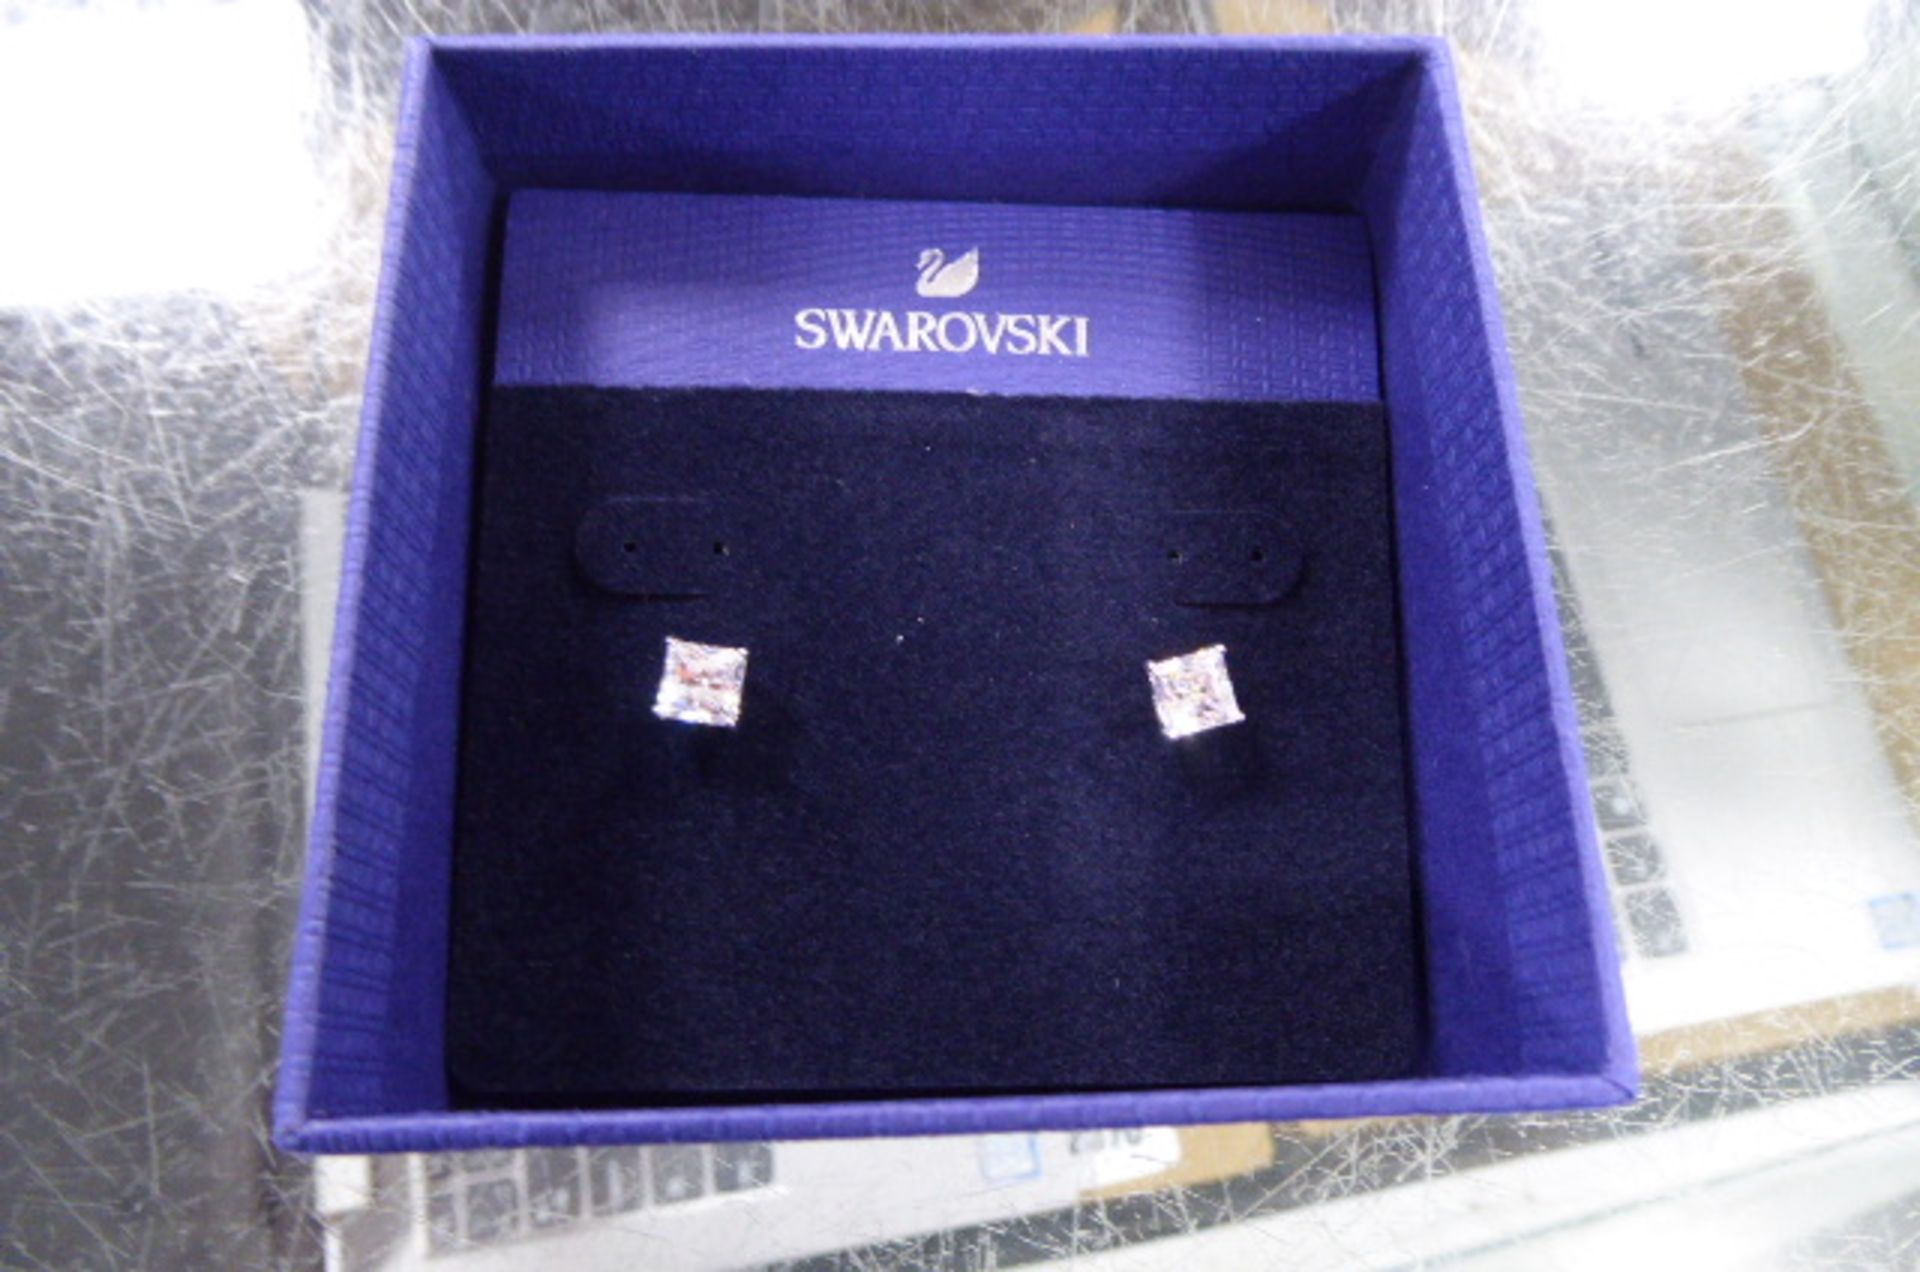 2 boxed sets of Swarovski stud earrings